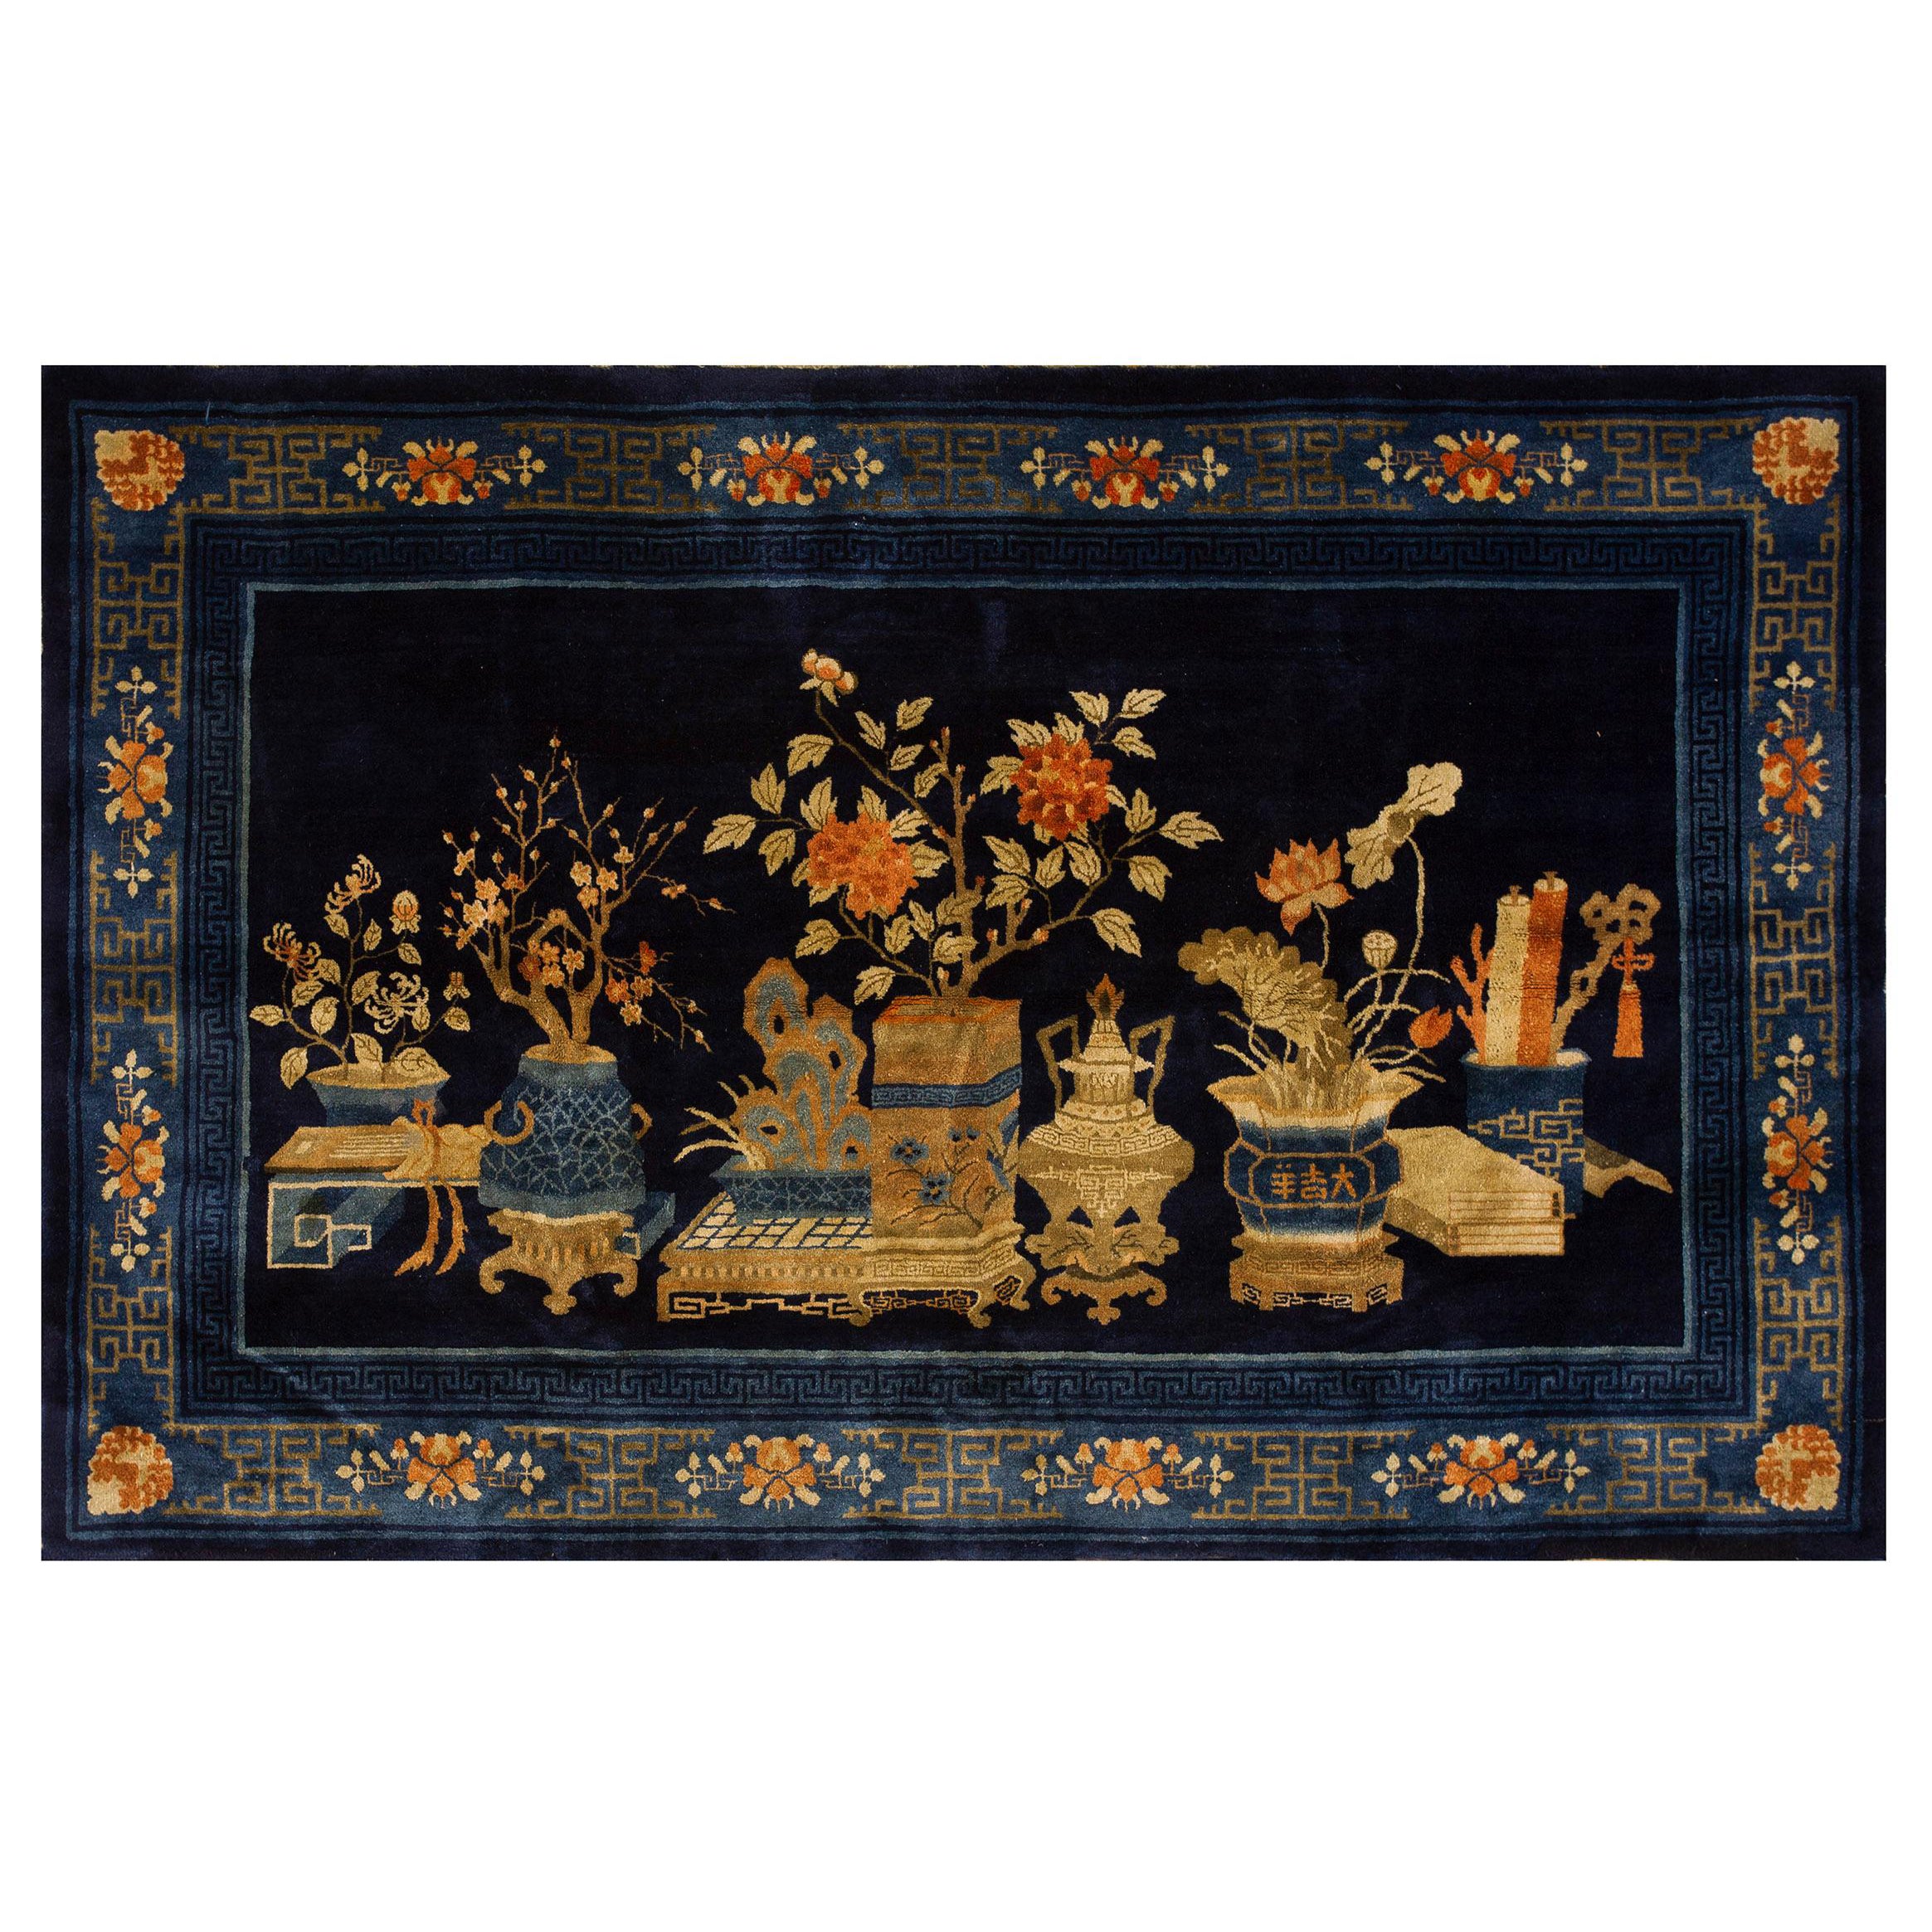 Early 20th Century Chinese Baotou Carpet ( 6' 3" x 9' 7" - 190 x 292 cm )